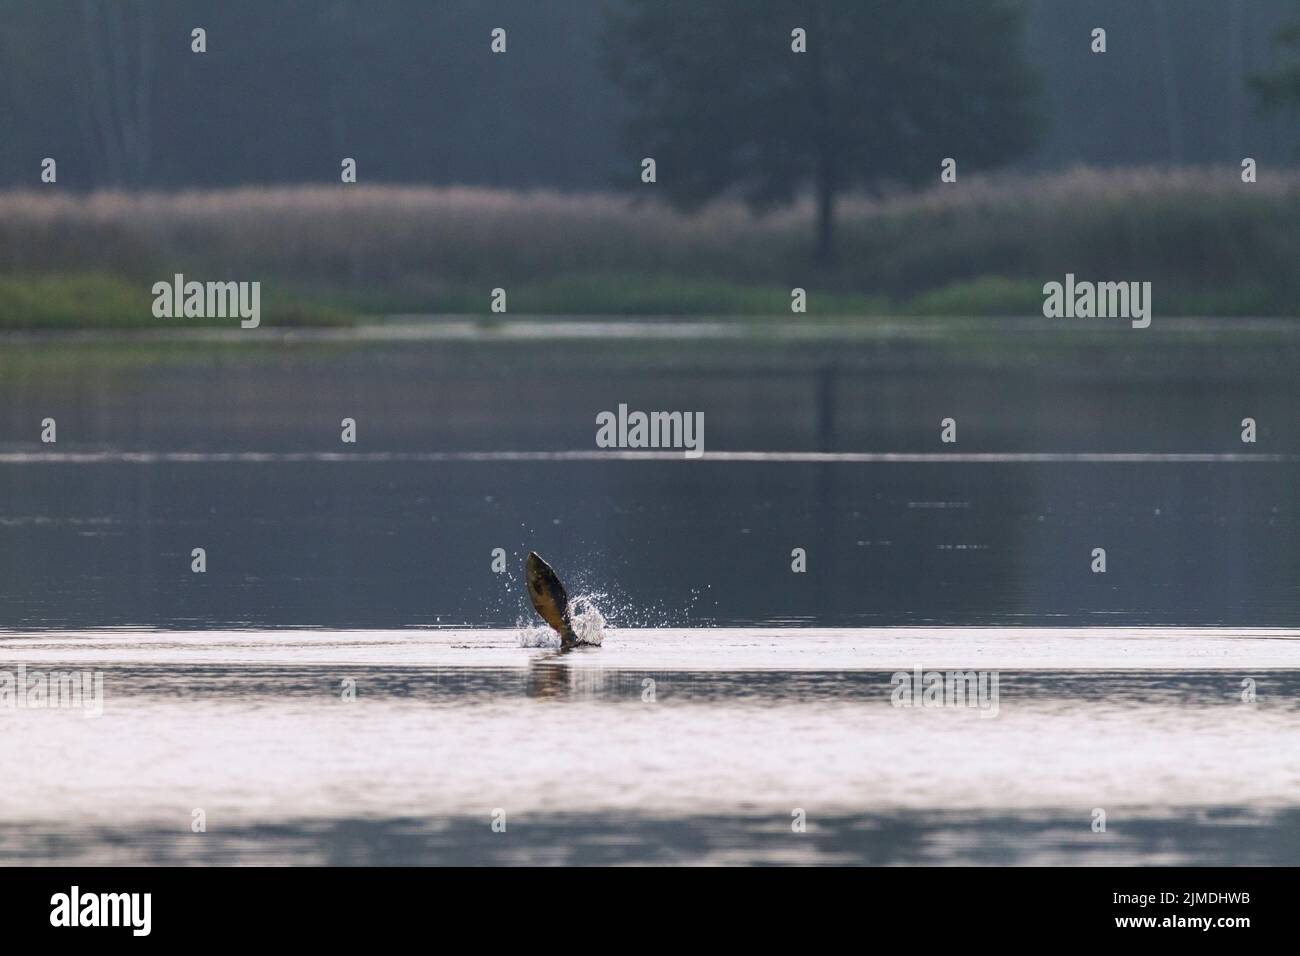 Common Carp jumps out of water / Cyprinus carpio Stock Photo